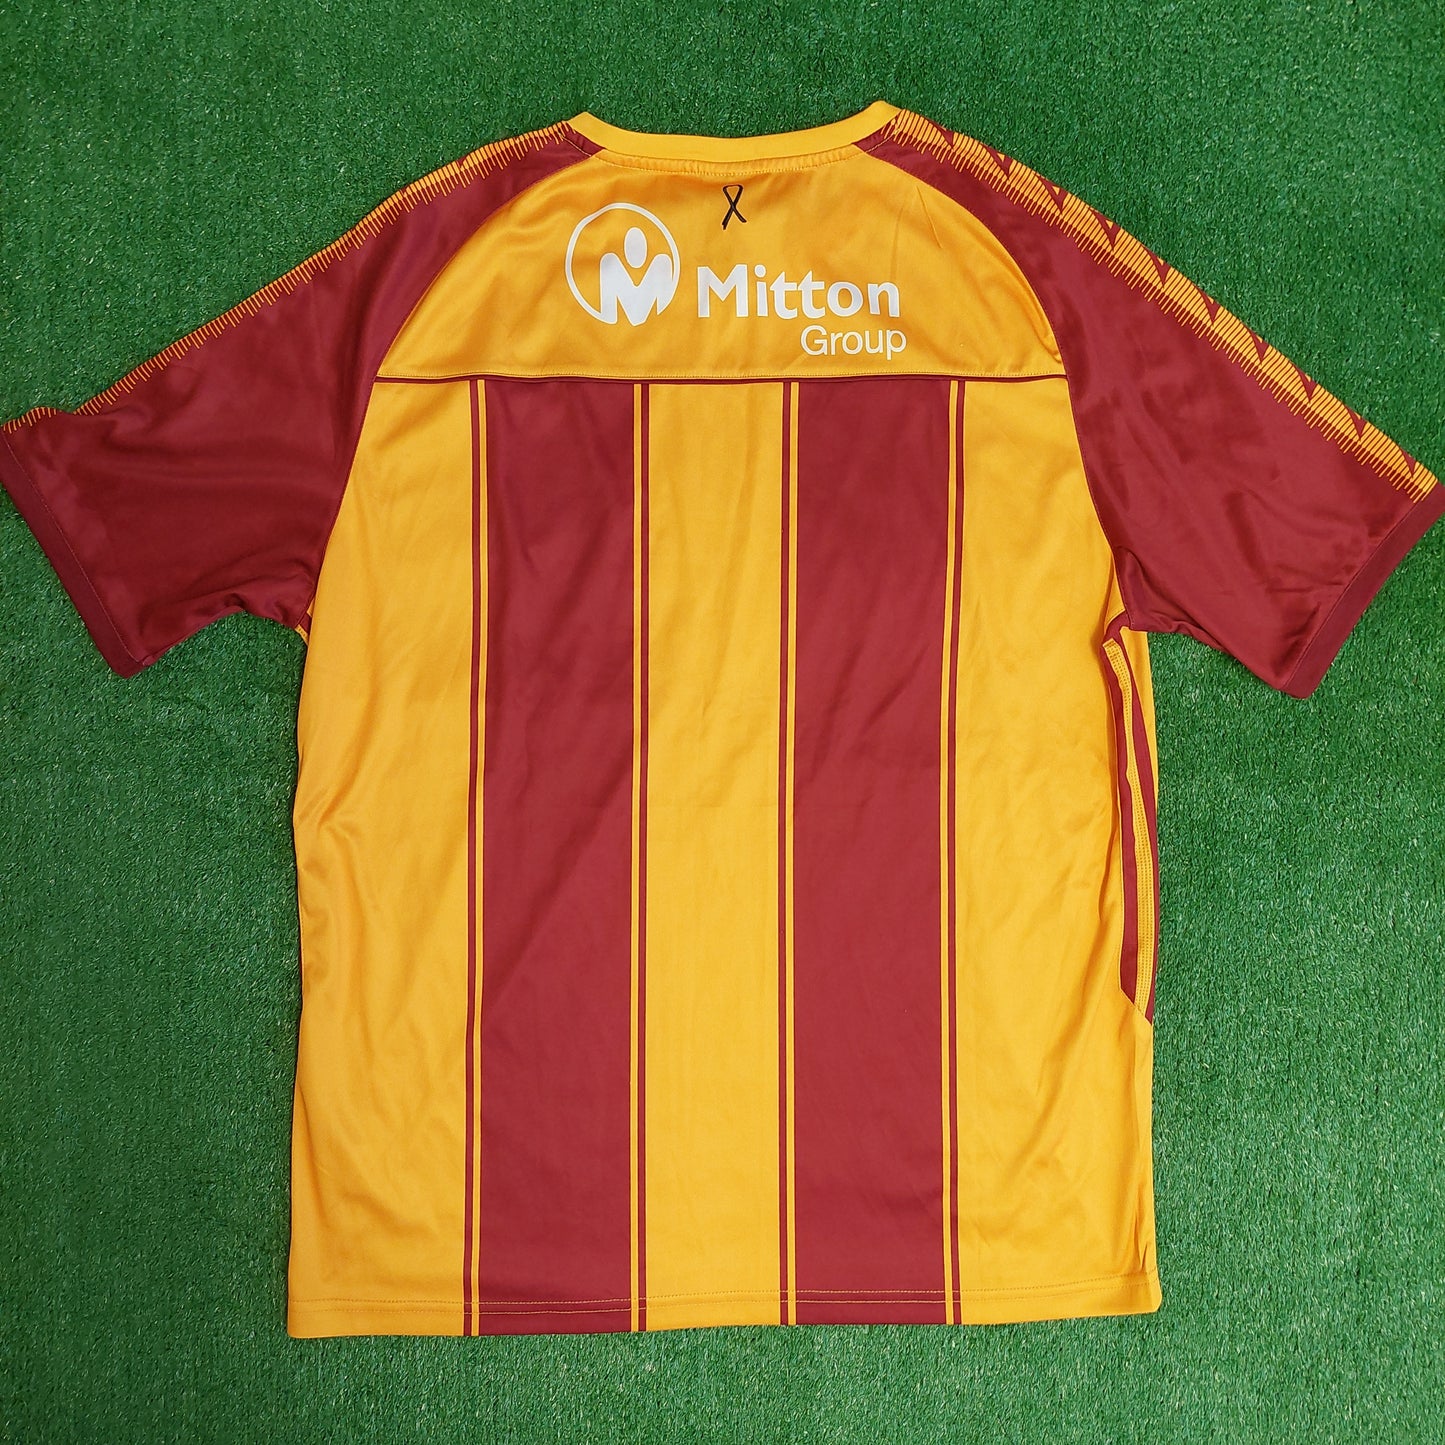 Bradford City 2020/21 Home Shirt (Excellent) - Size XL